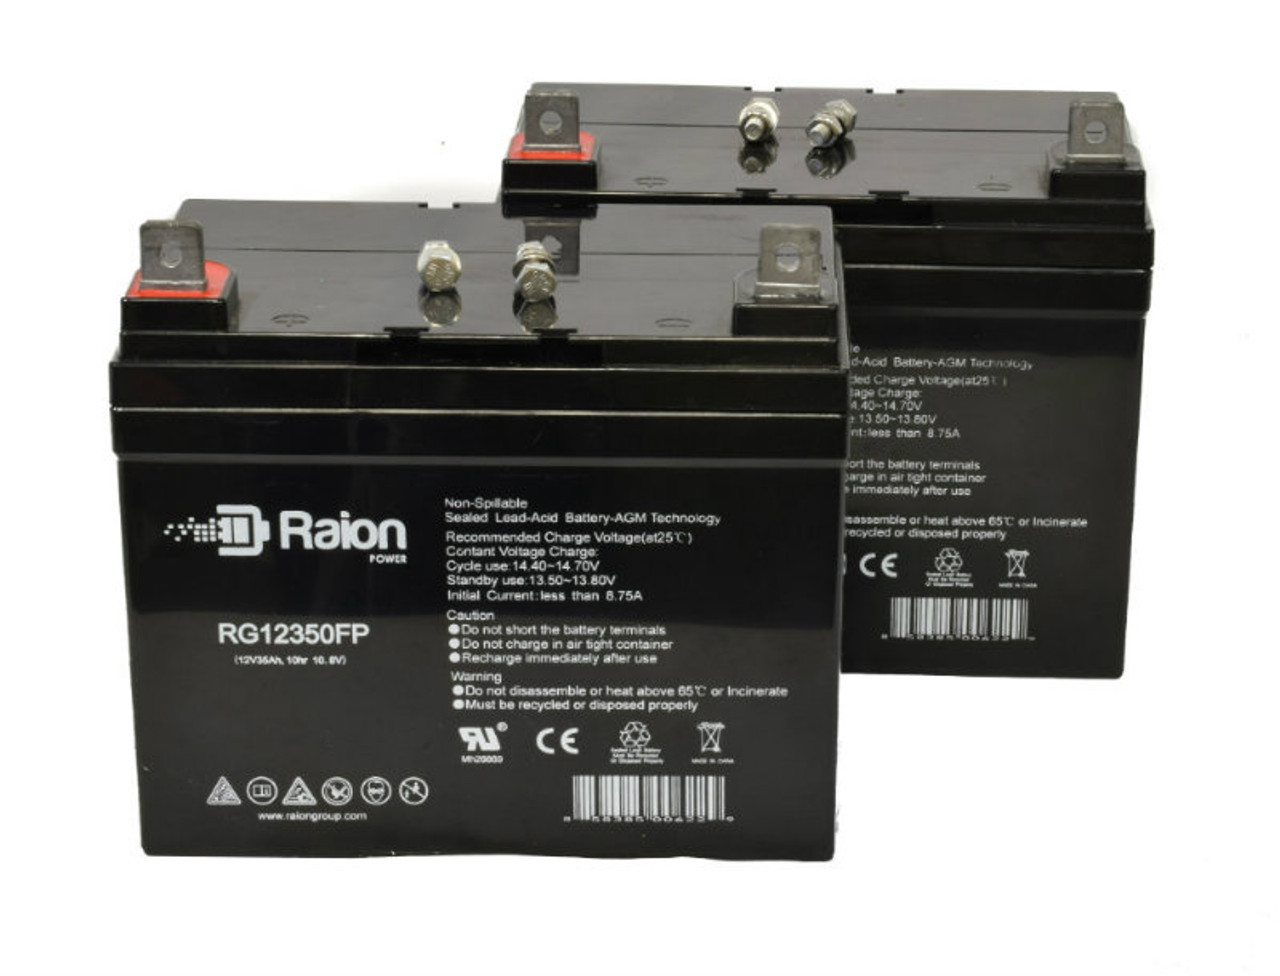 Raion Power Replacement 12V 35Ah Lawn Mower Battery for Heilman Enterprises 11-76 - 2 Pack